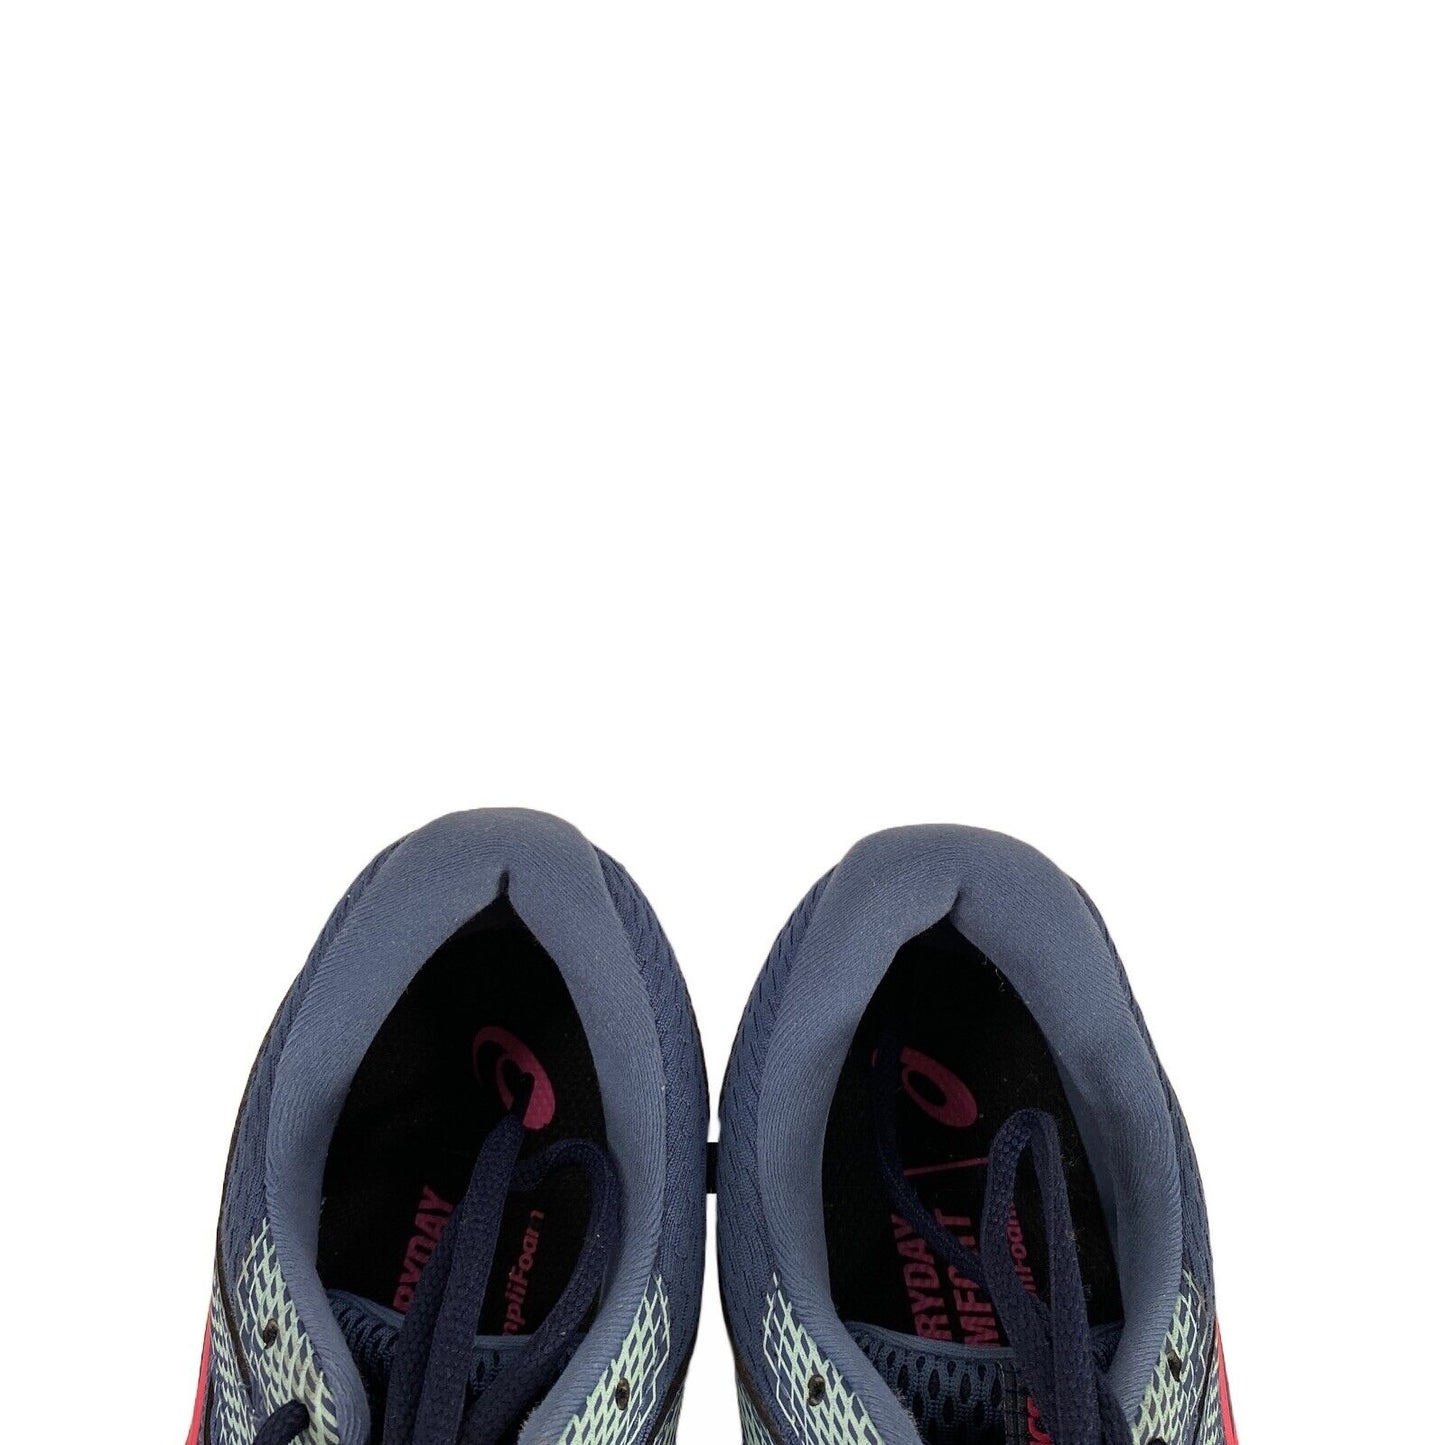 Asics Women's Blue Gel-Contend 6 Lace Up Athletic Shoes - 8